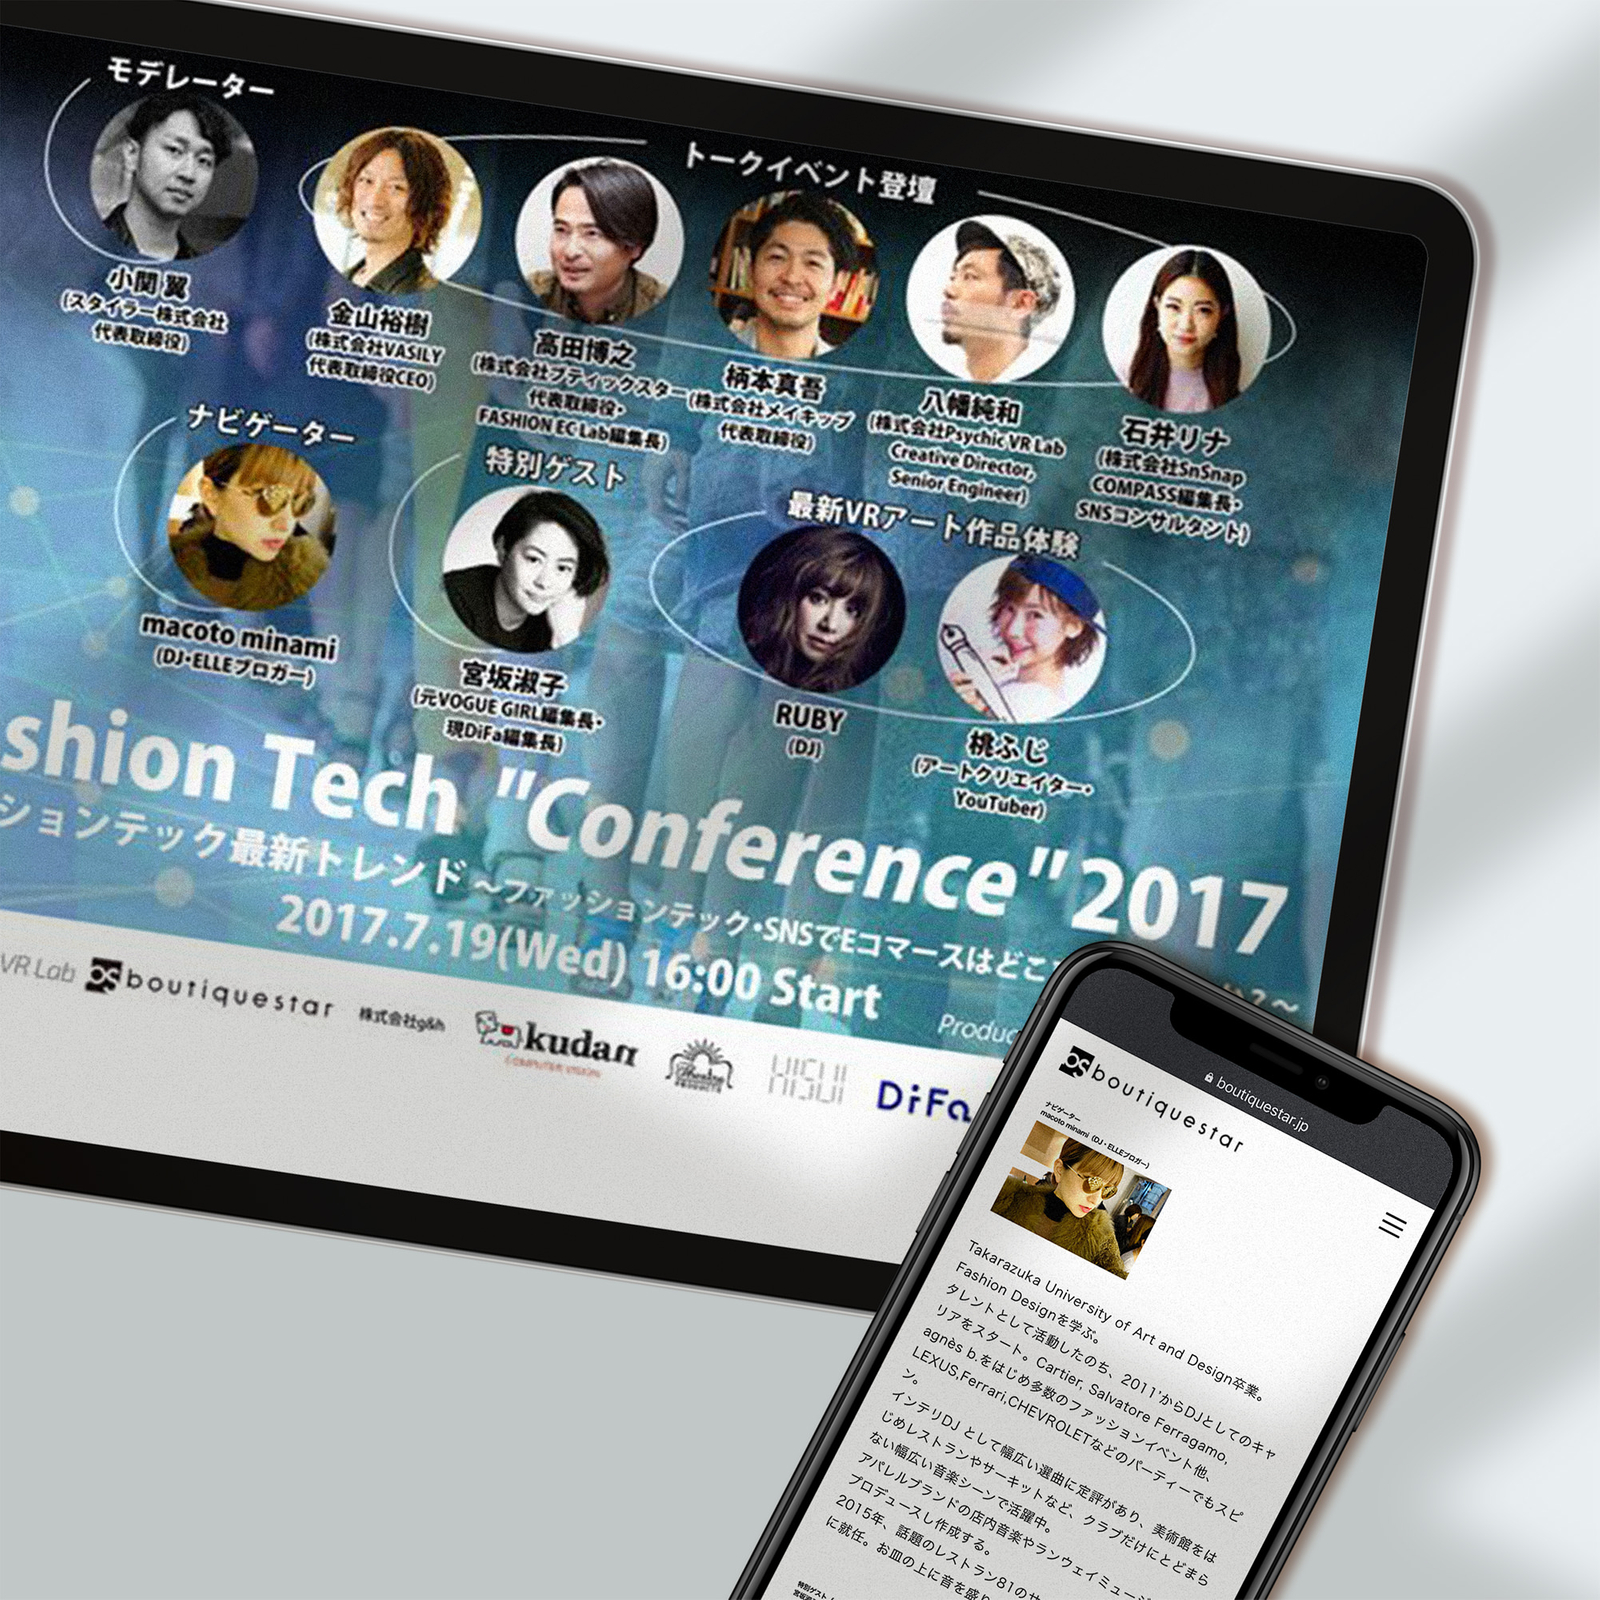 Fashion Tech Conference 2017